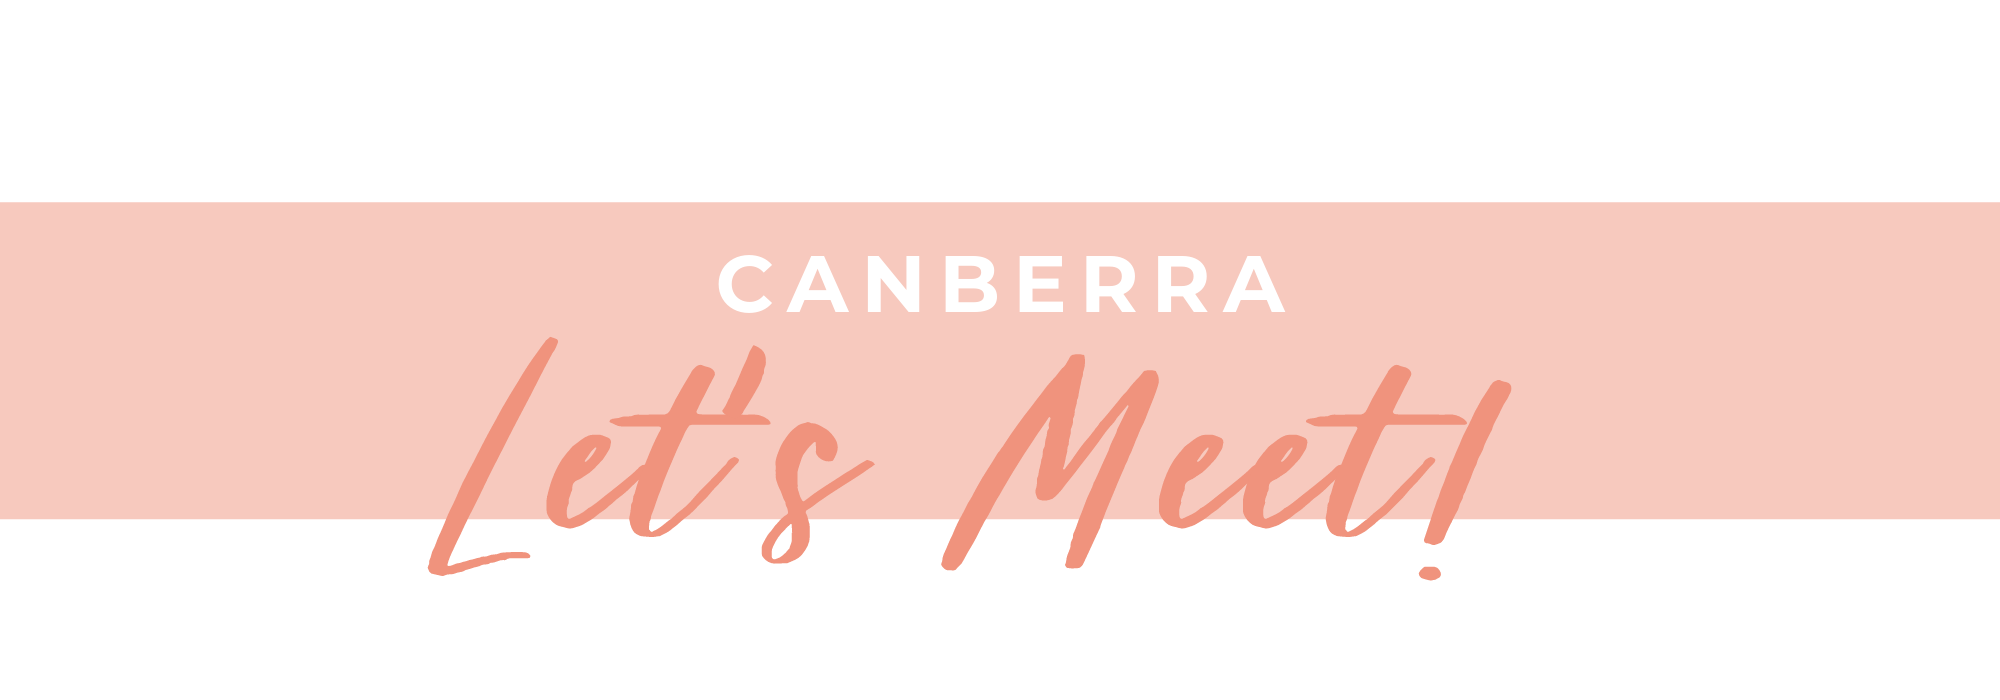 Canberra Let's Meet